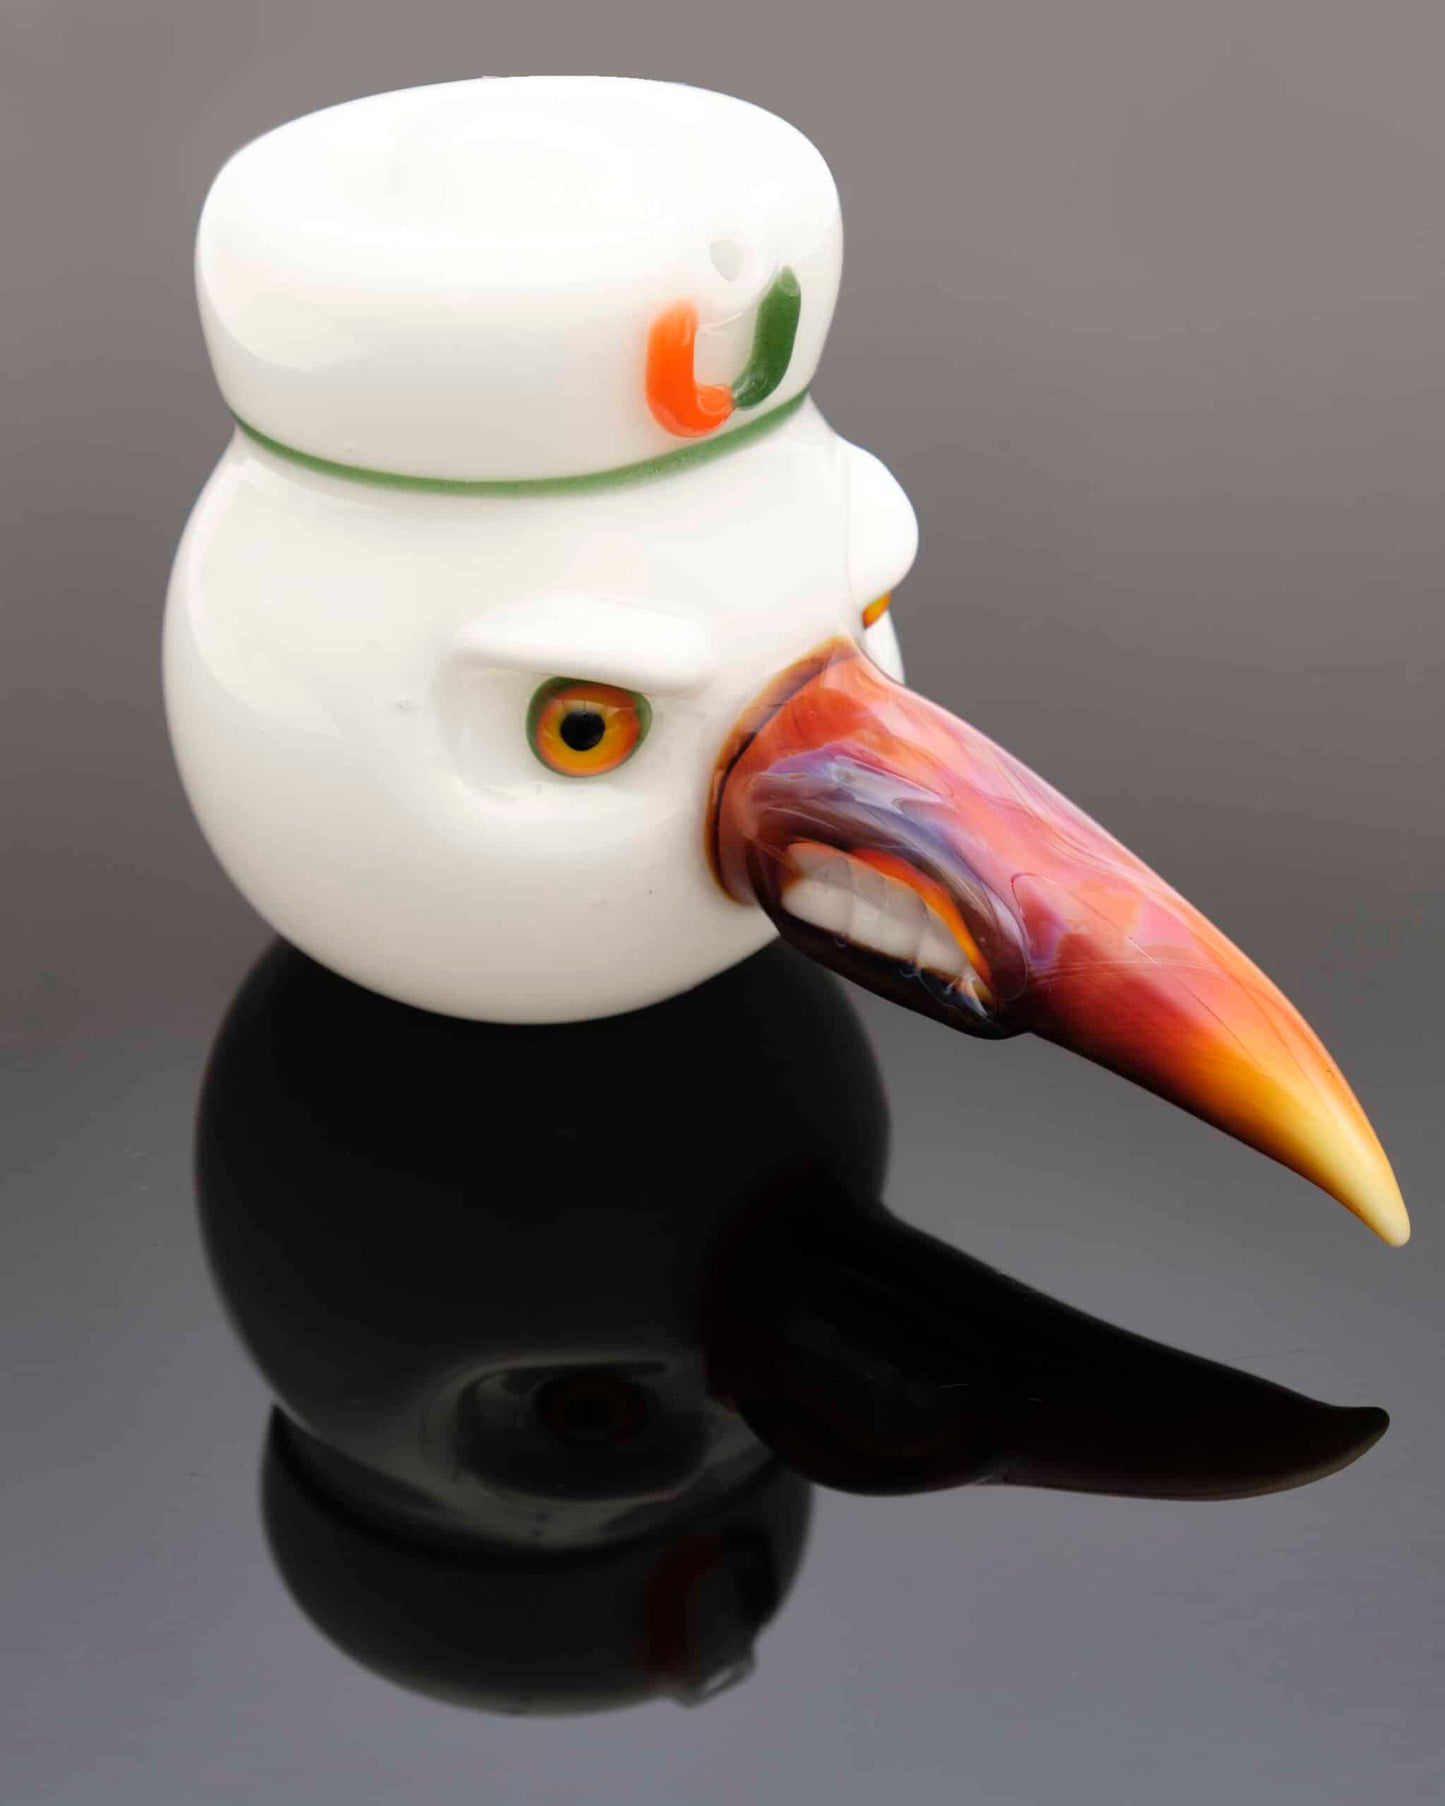 artisan-crafted design of the Sebastian Angry Bird Rig by Burtoni